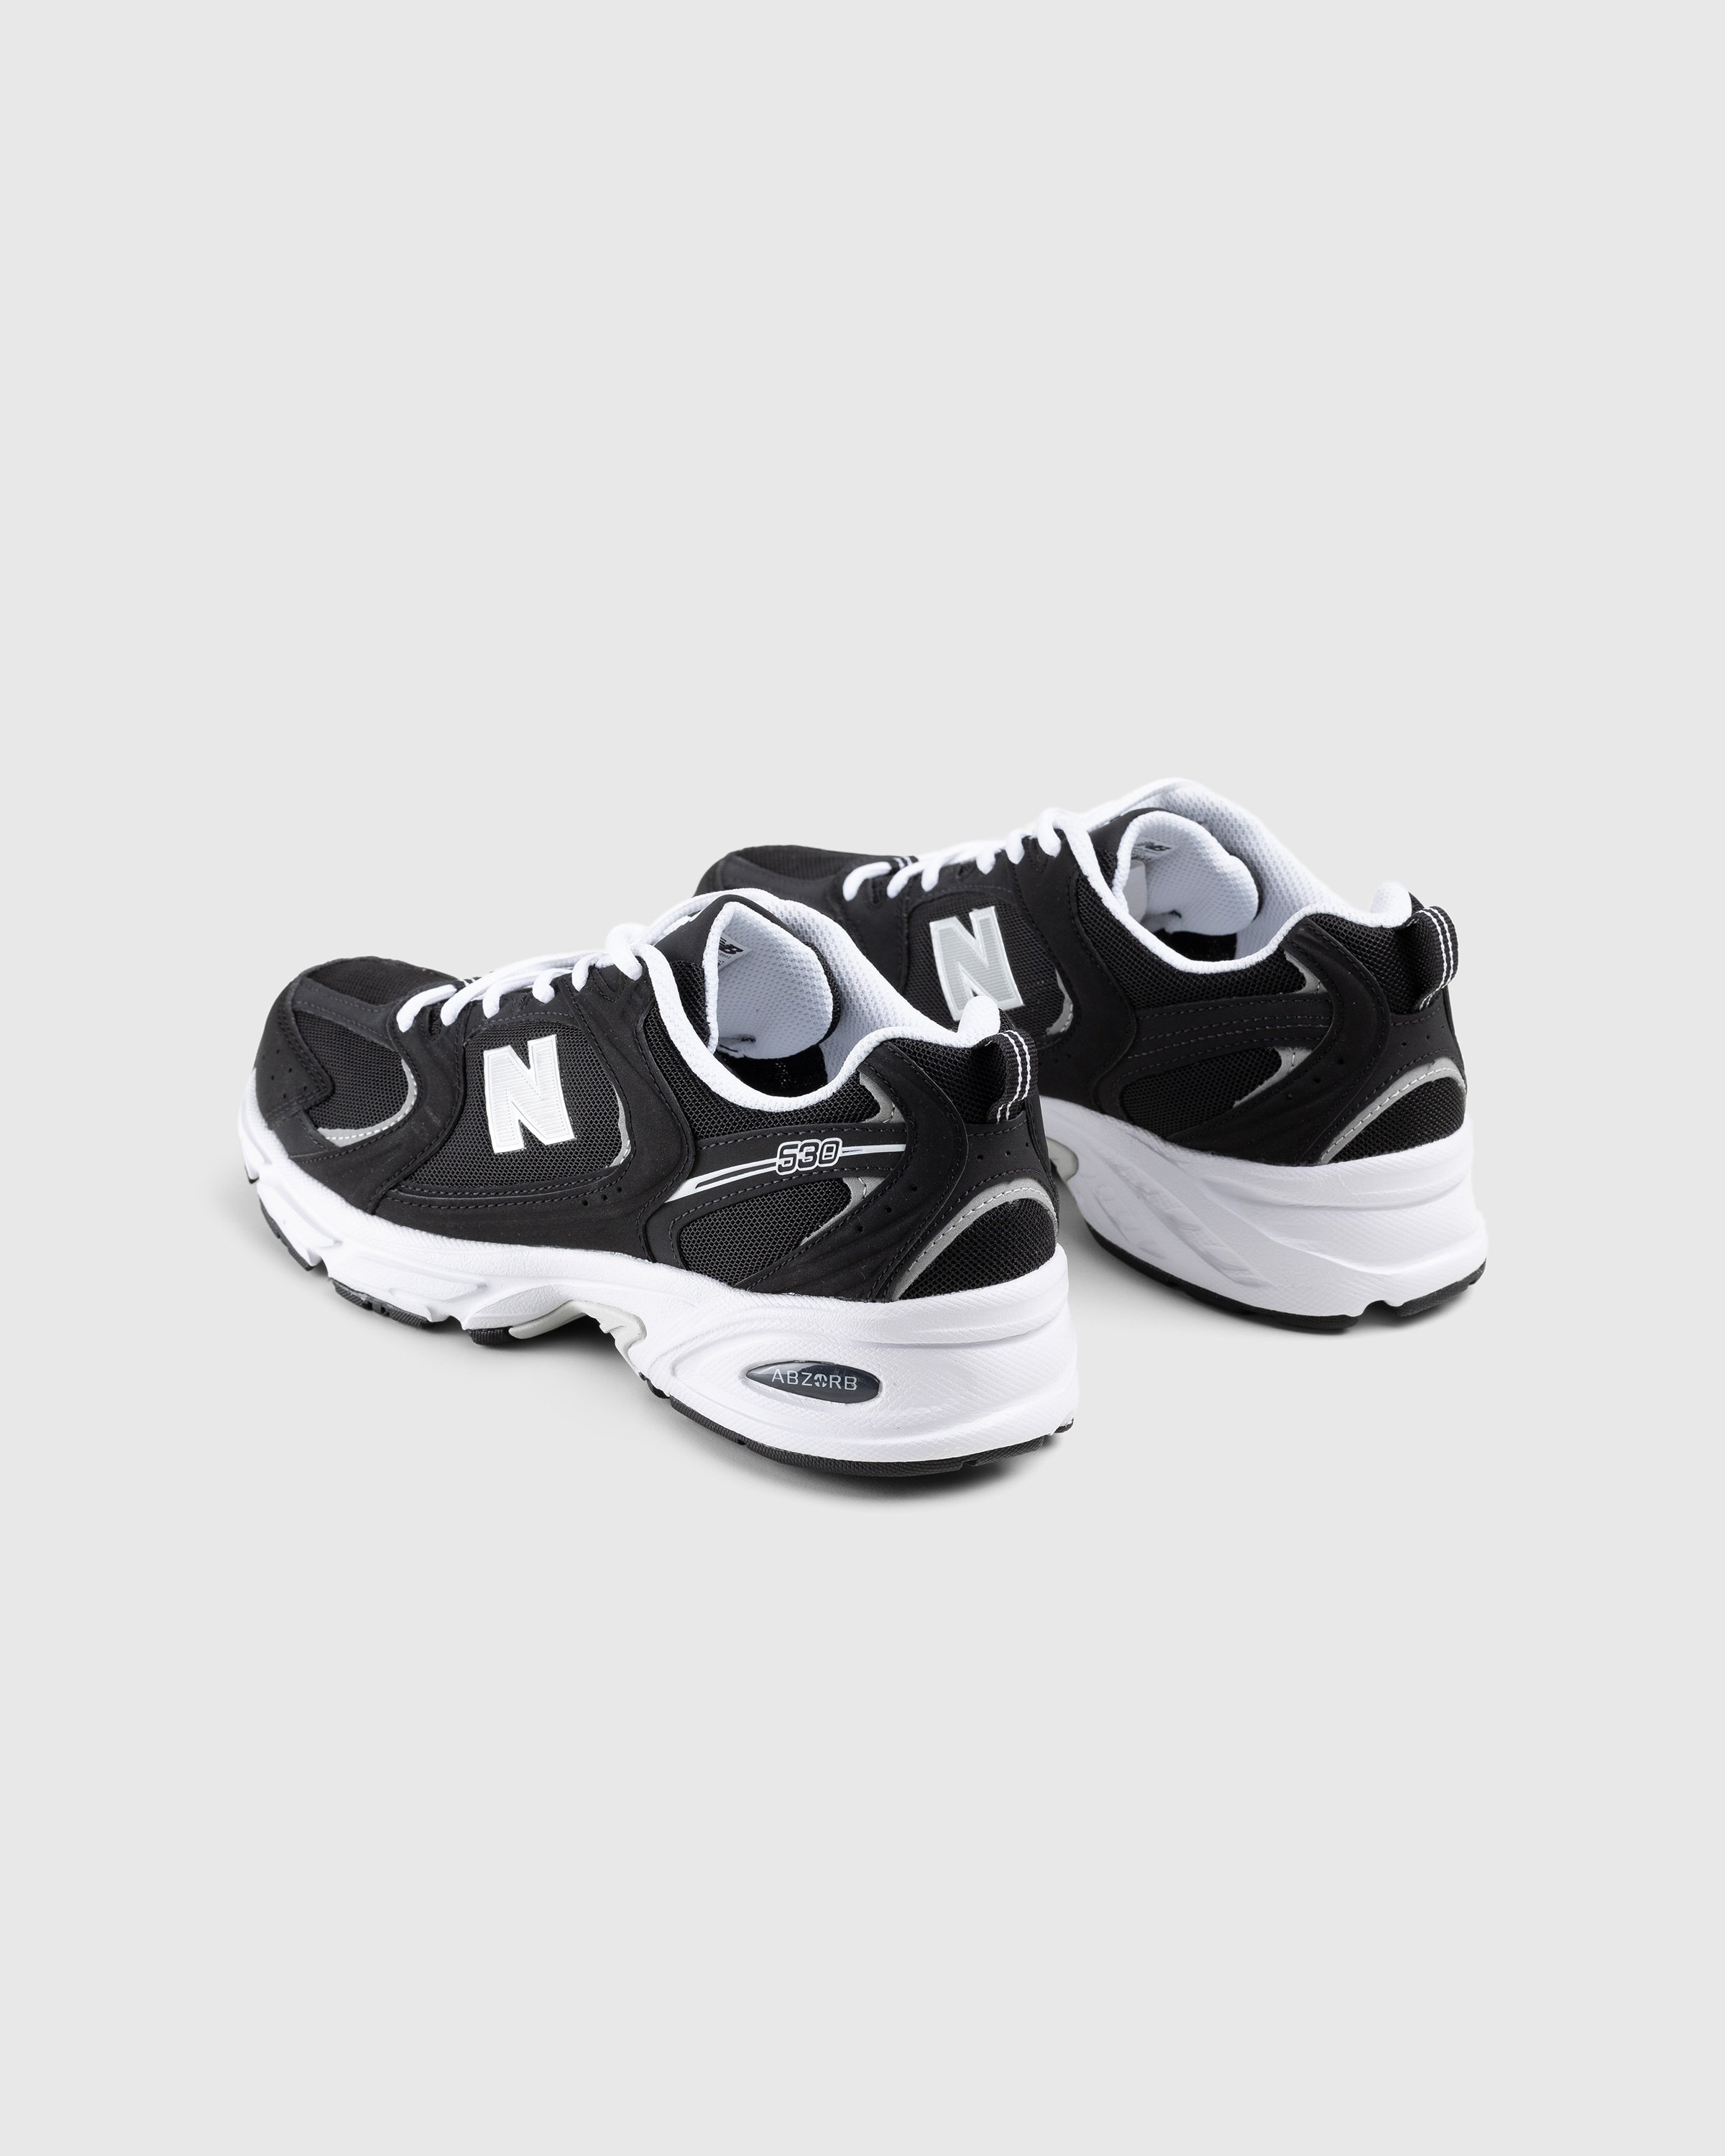 New Balance - MR530SMN Phantom - Footwear - Black - Image 4